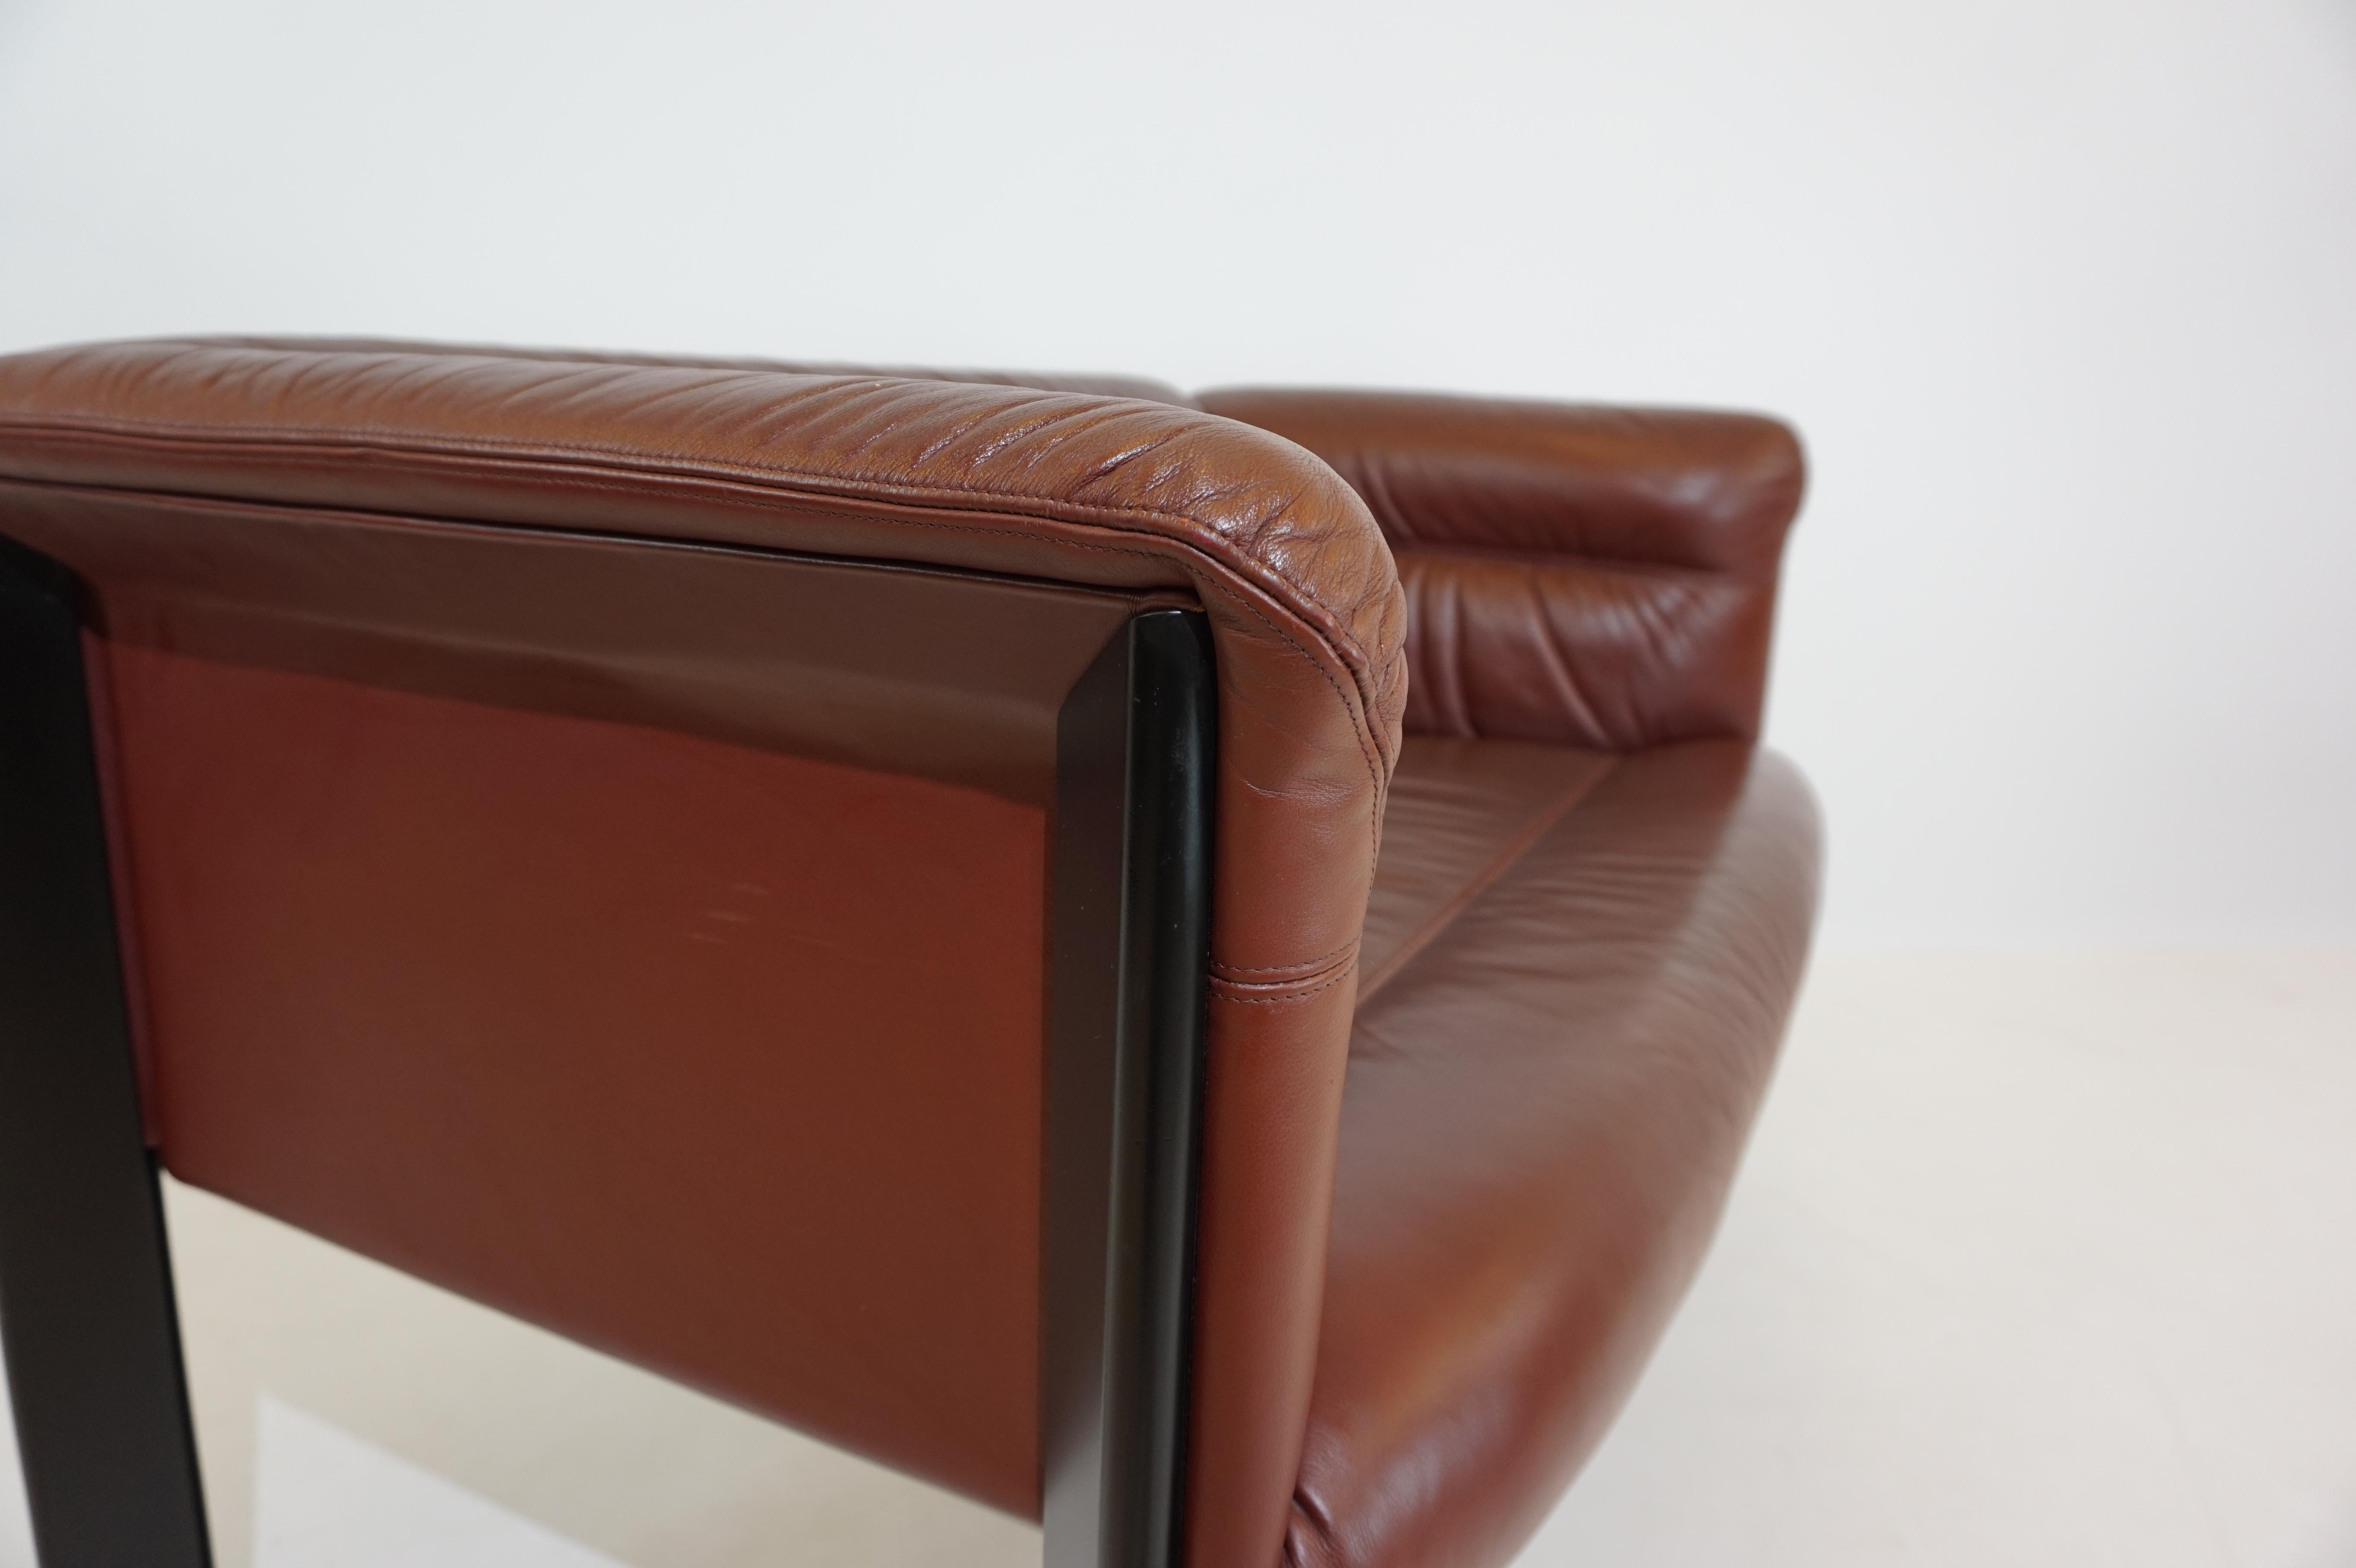 Poltrona Frau Interlude leather bench 2 seater by Marco Zanuso 3